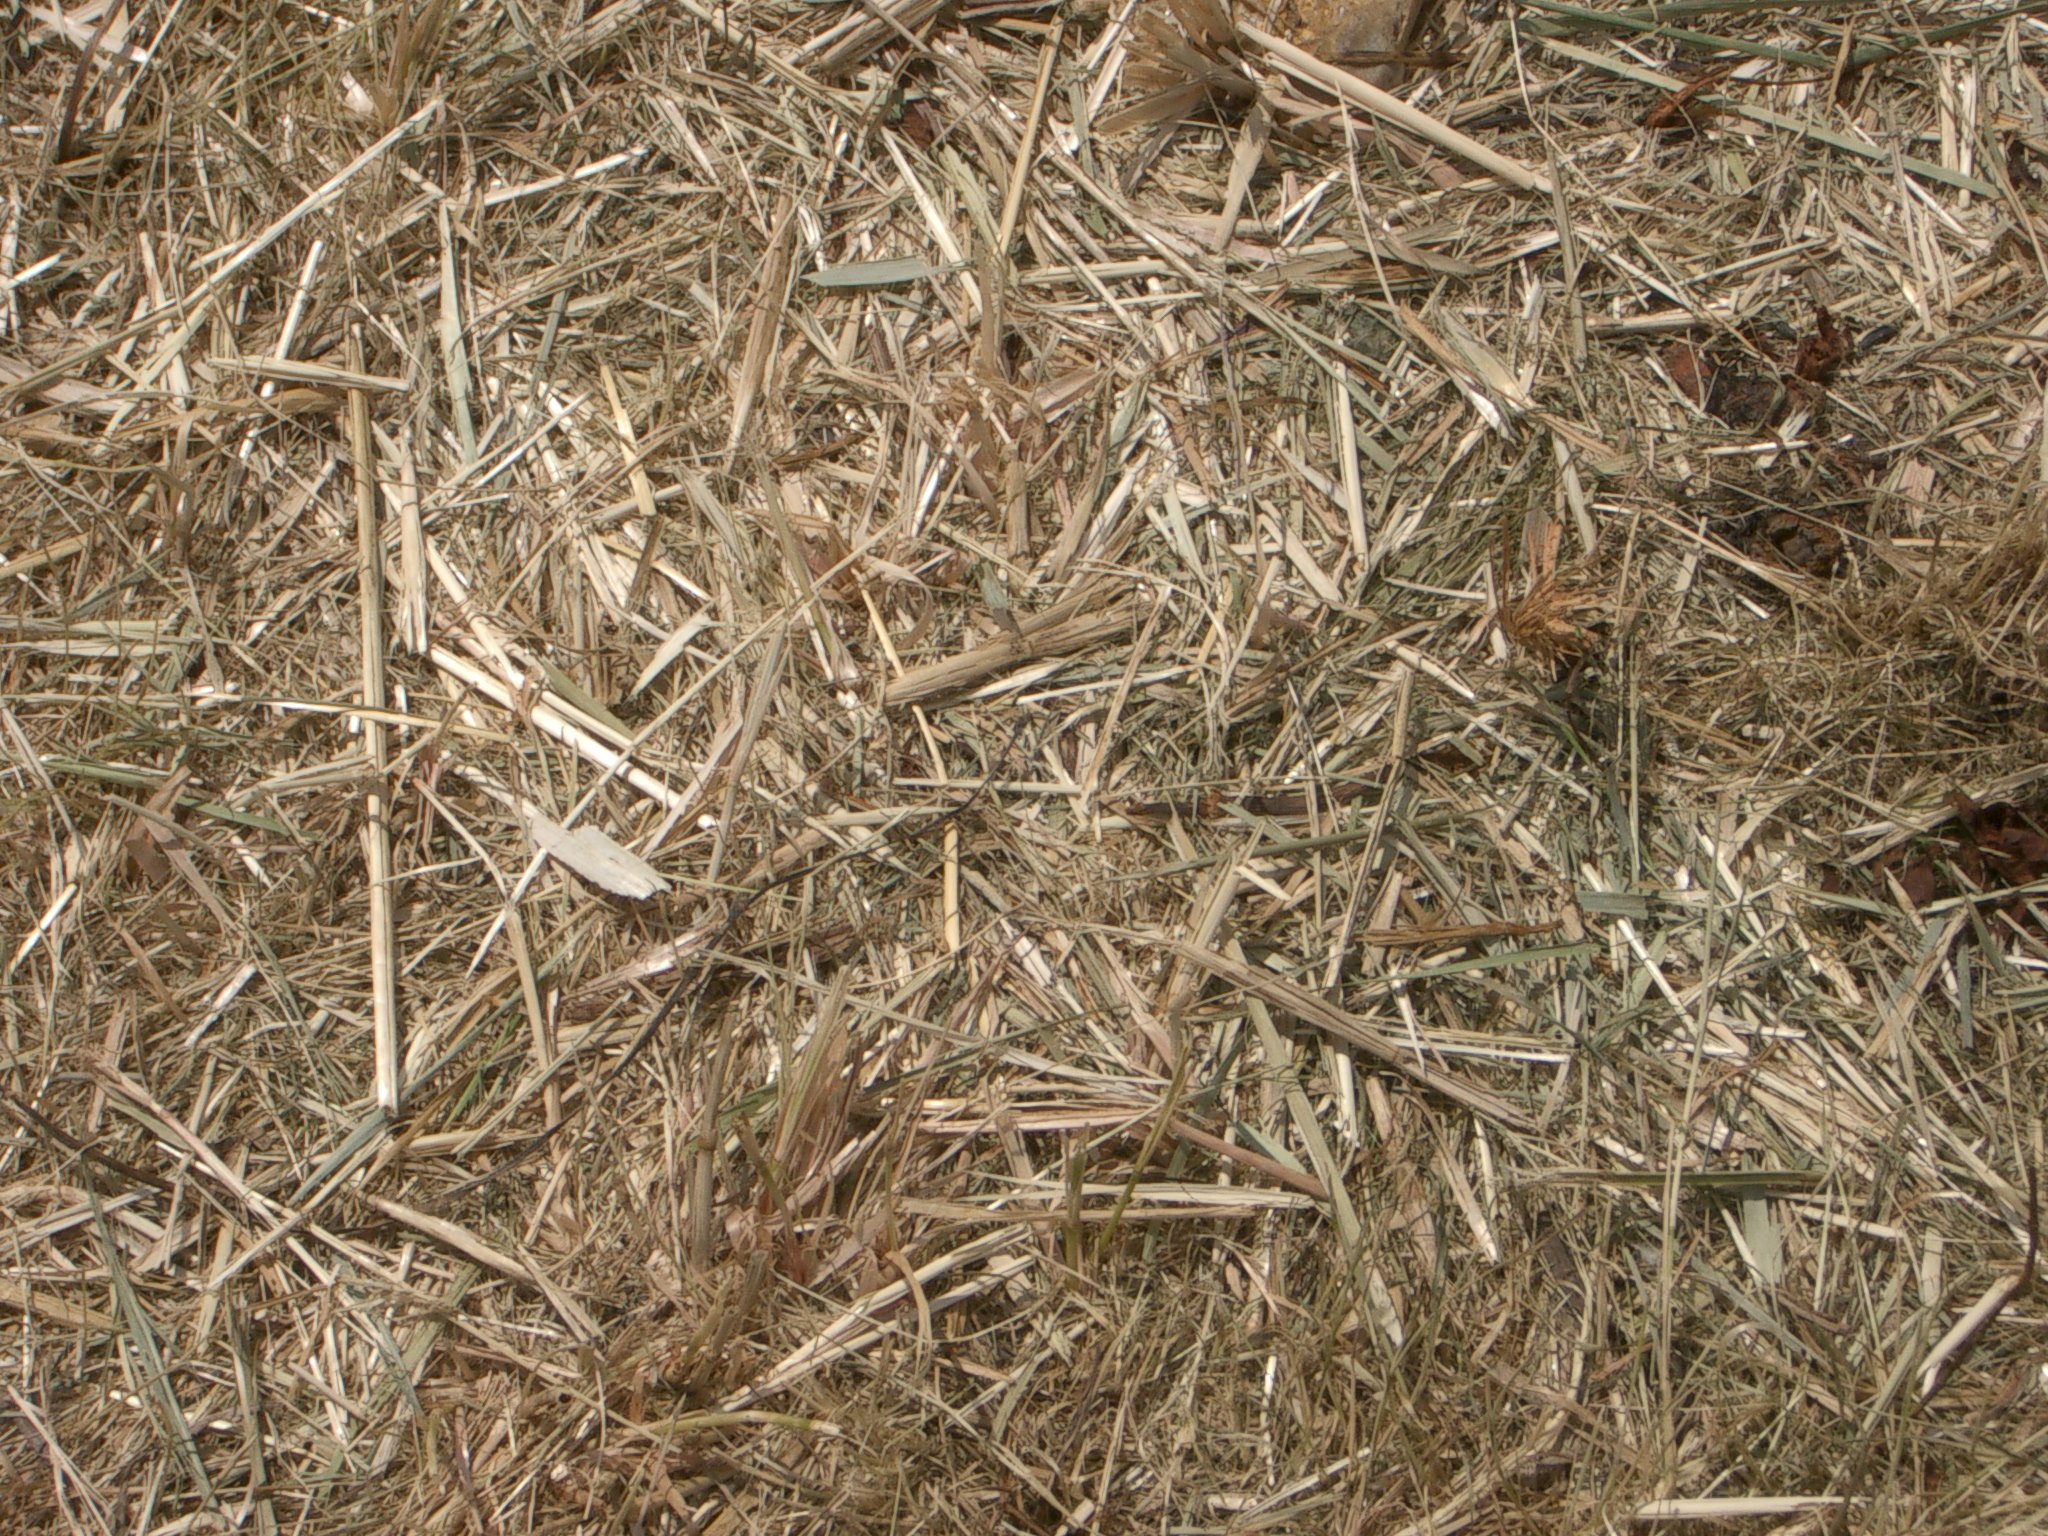 Dry Grass Texture by slobo777-stock on DeviantArt